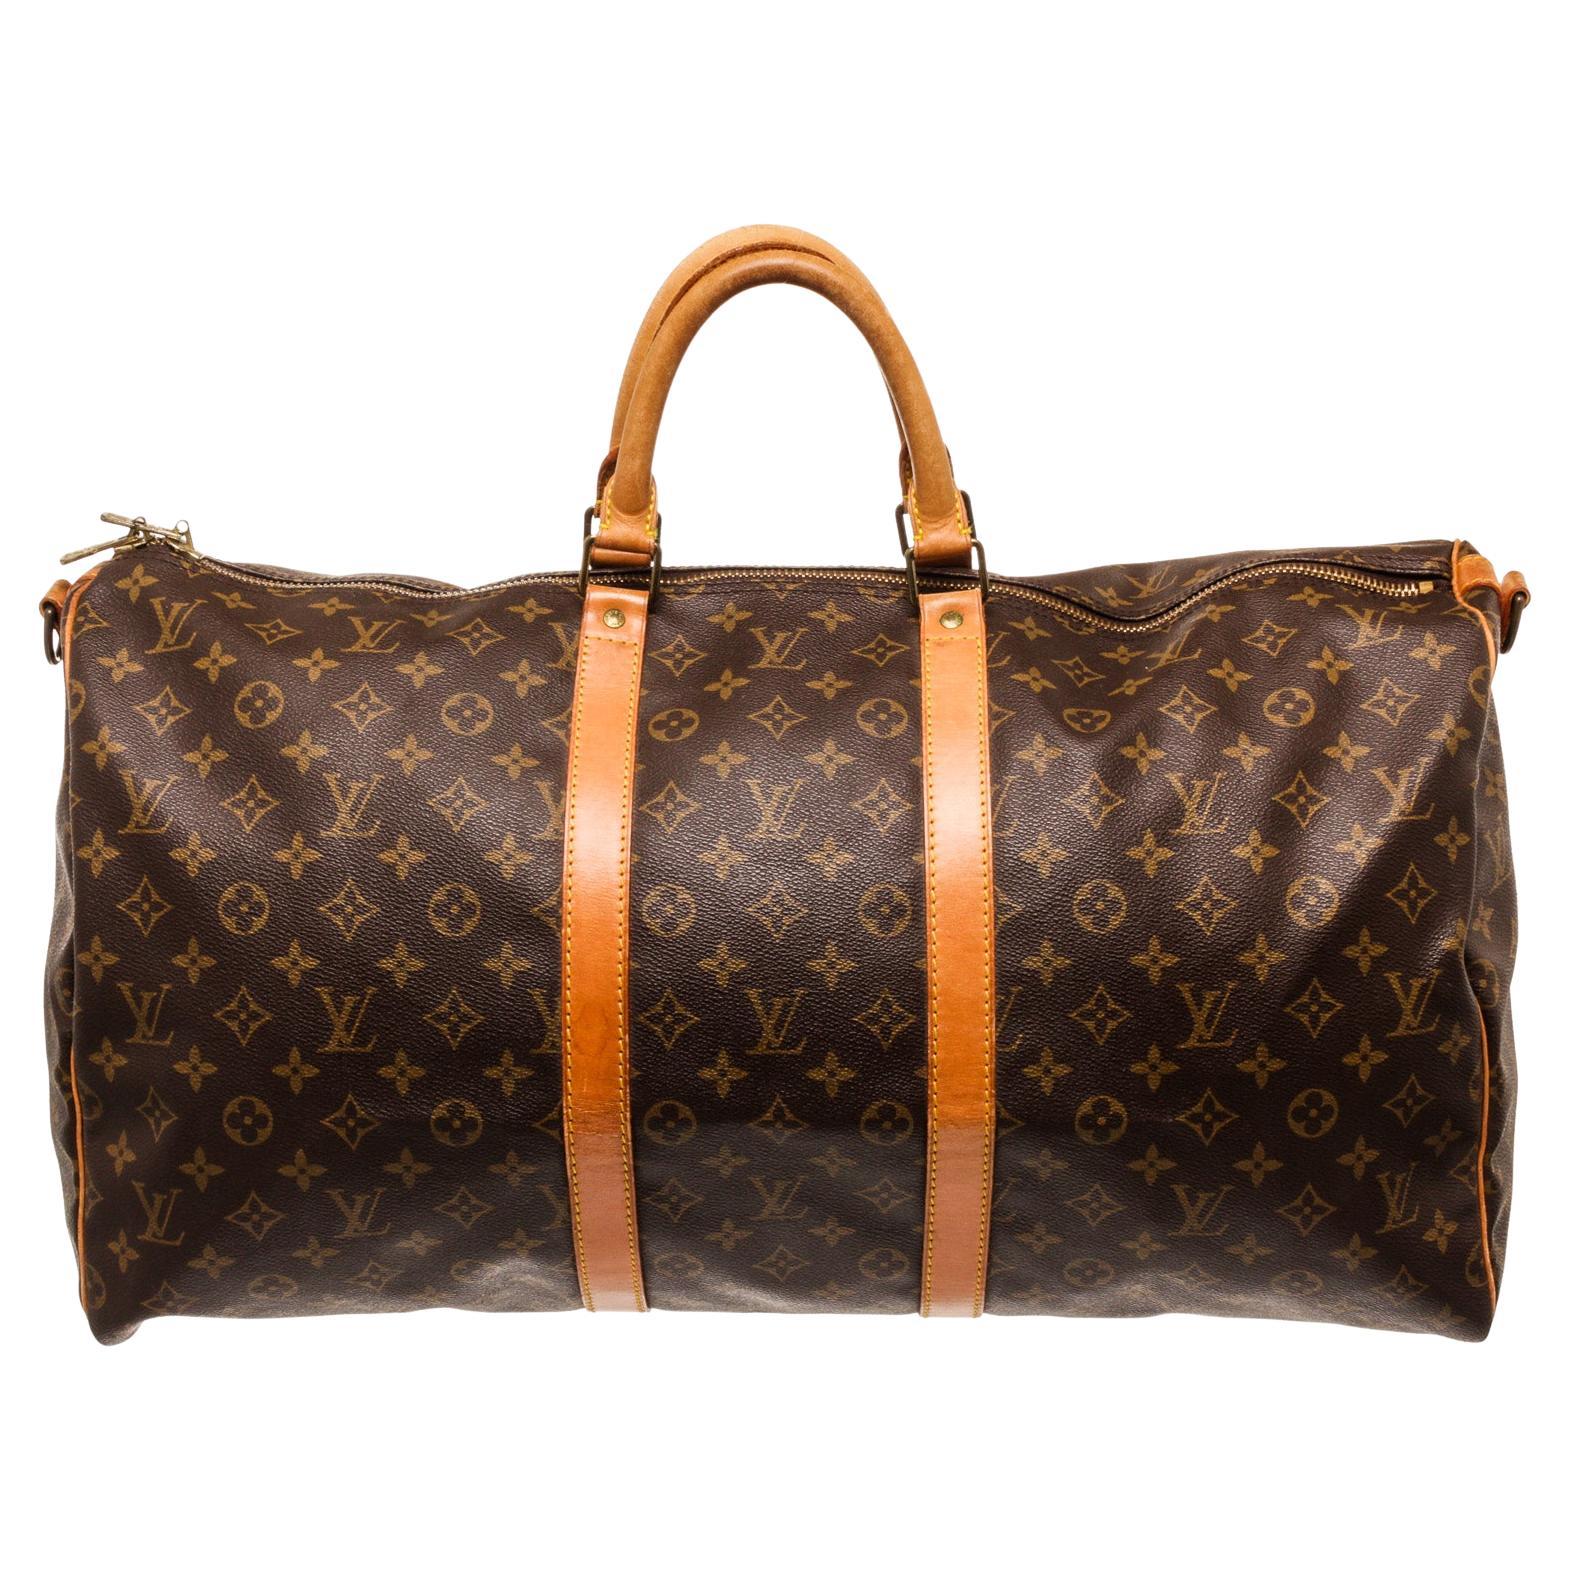 Louis Vuitton Brown Monogram Keepall 55cm Travel Bag